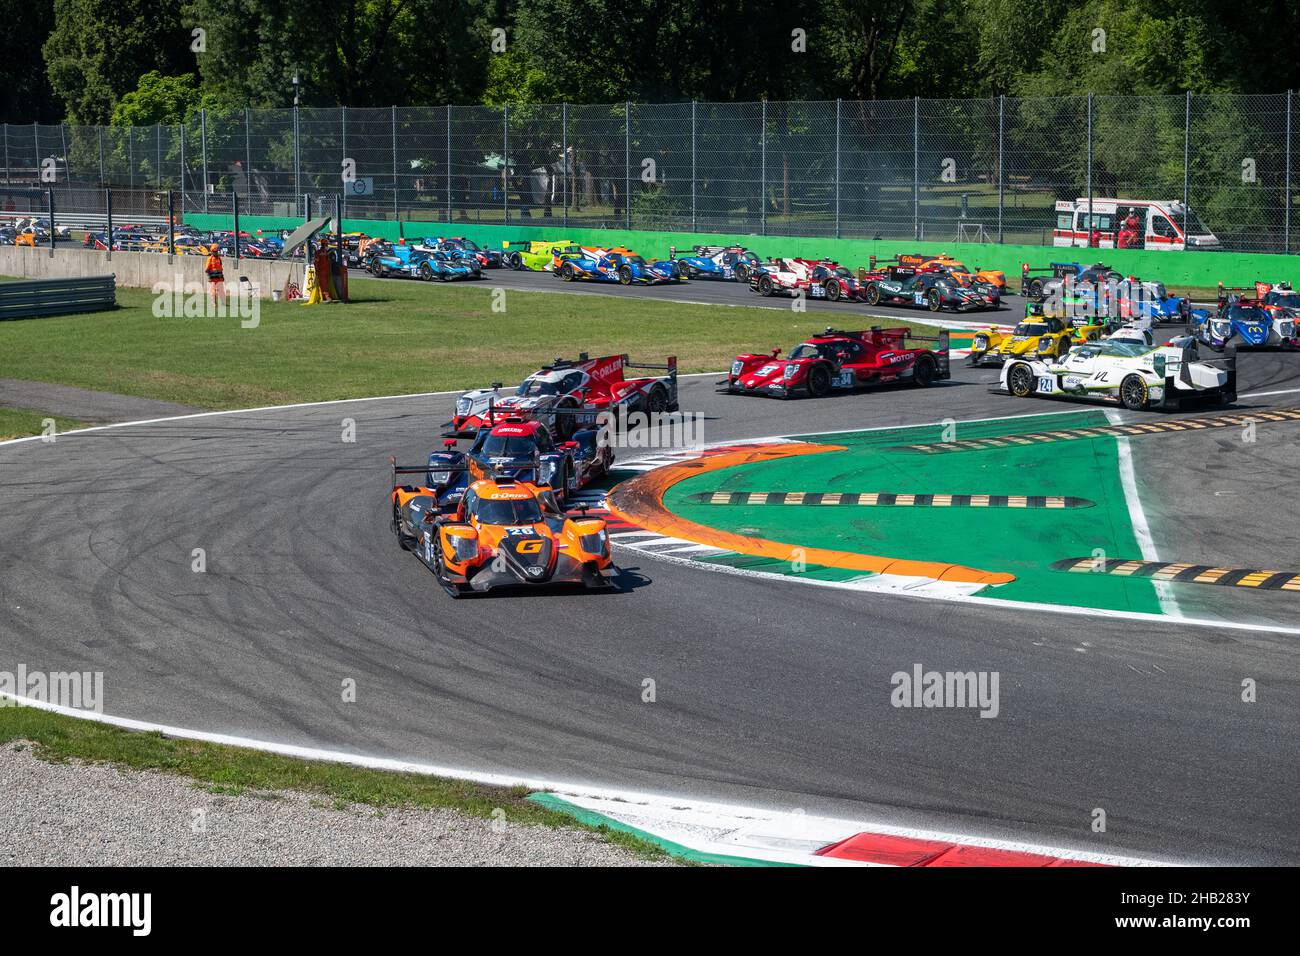 Race Start 2021 European Le Mans Series, Monza, Italy. Photo © John D Stevens. Stock Photo